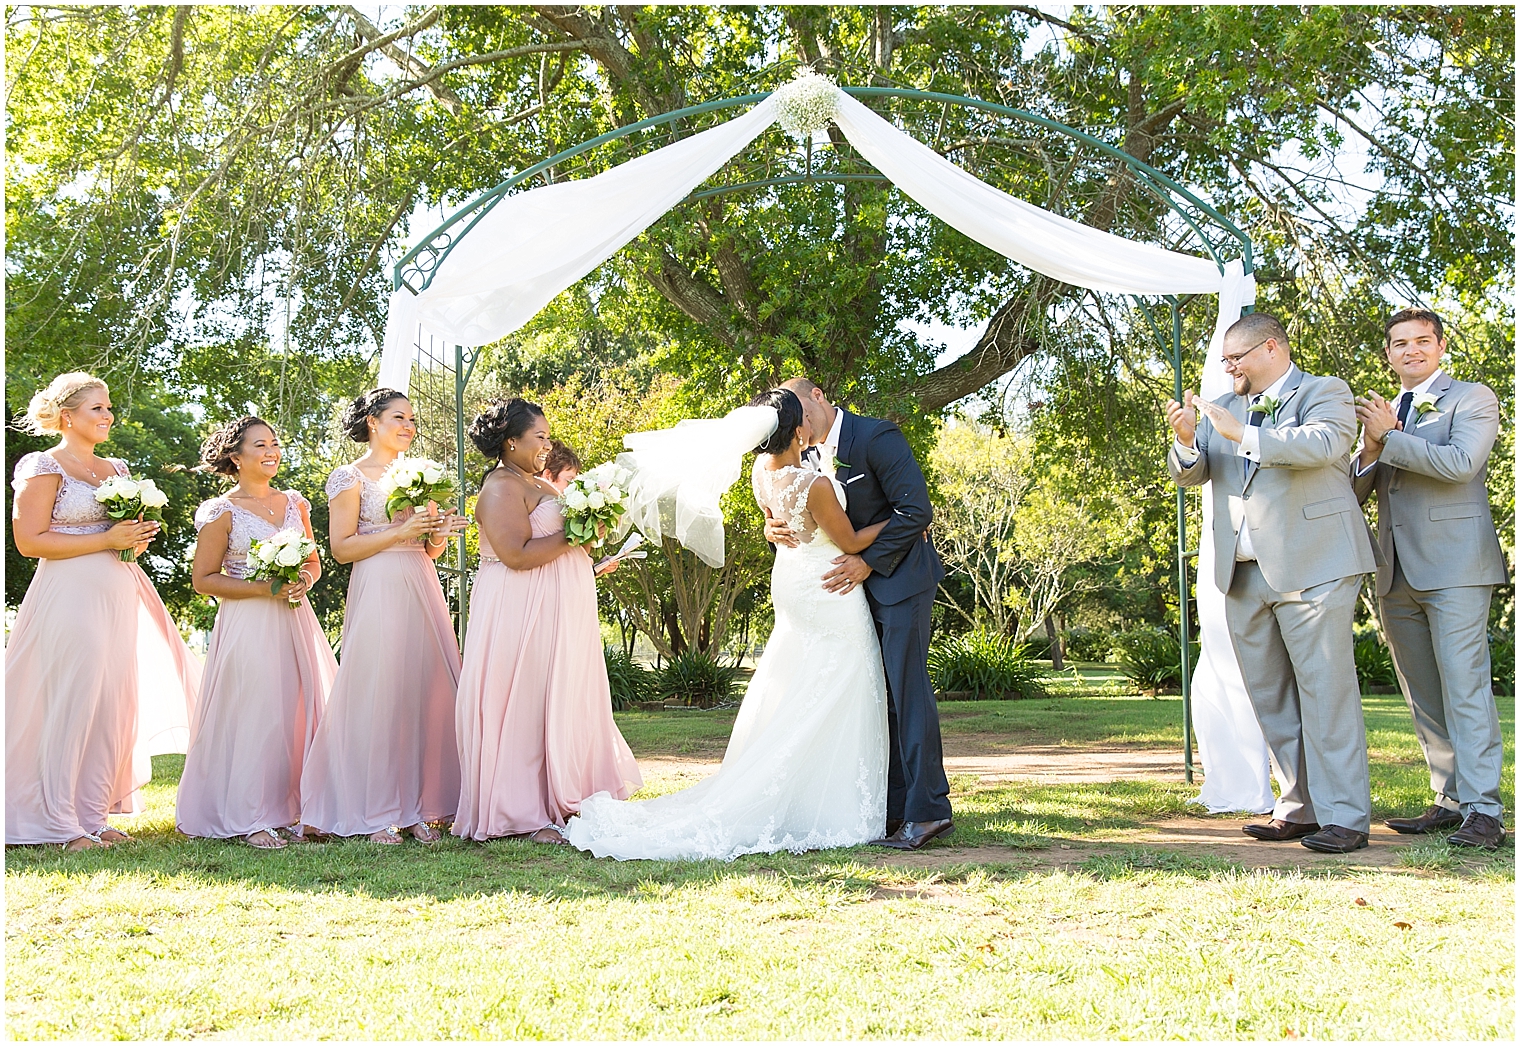 Sydney Wedding Photographer, The Kiss, Wedding Day Kiss, Bridal Party